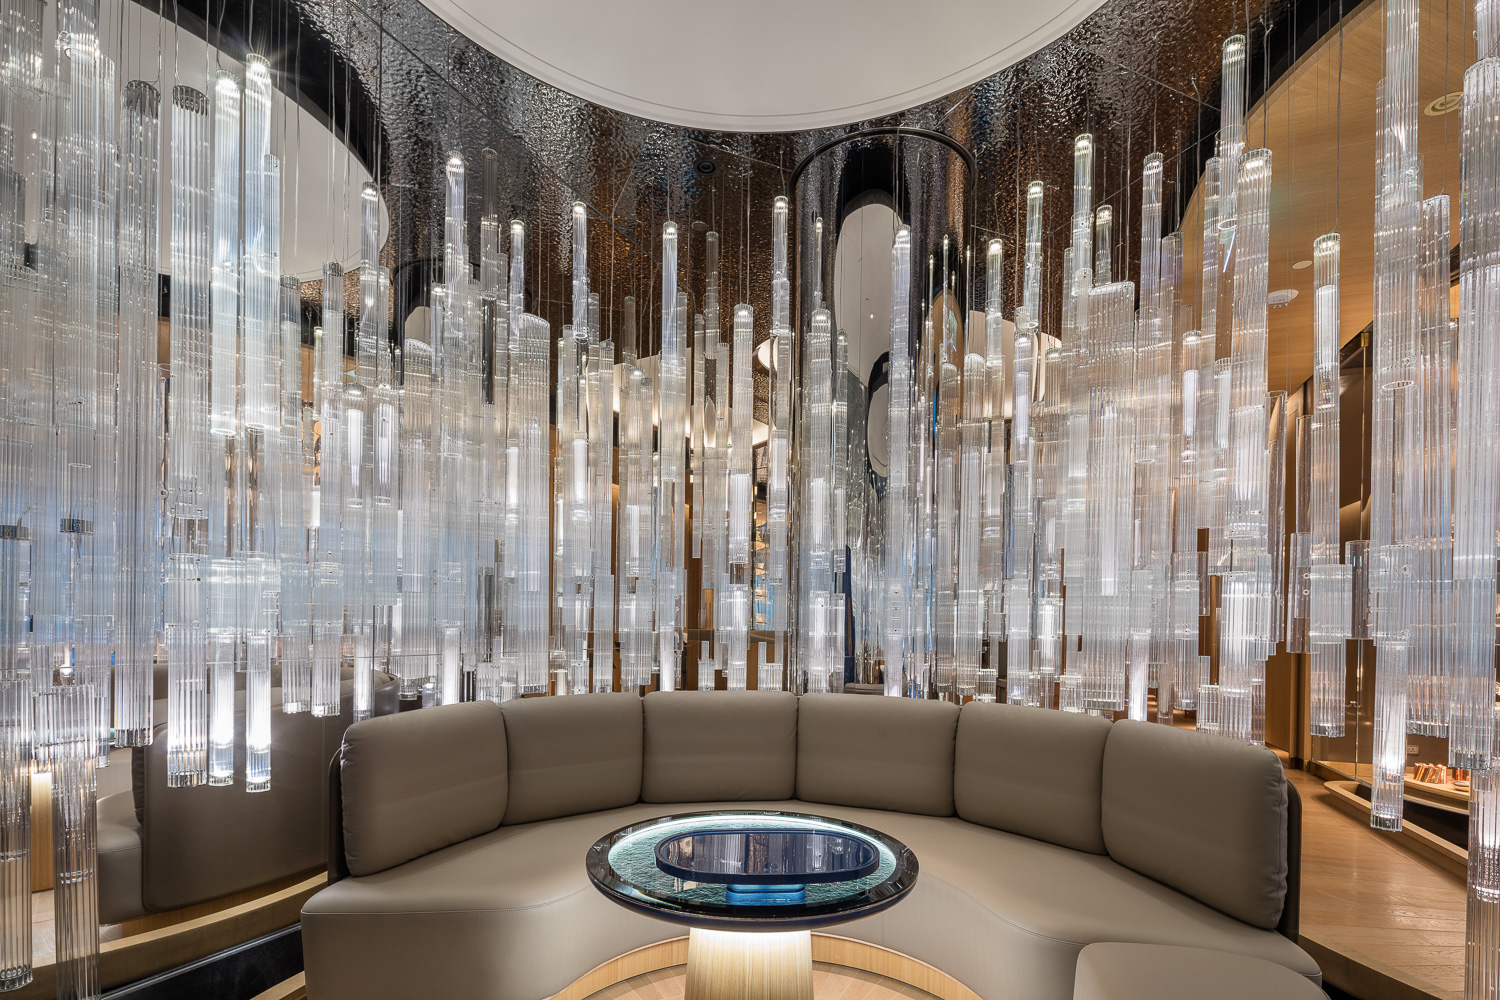 Custom lighting, created in collaboration with design studio Jouin Manku, illuminates Alain Ducasse's restaurant at the Morpheus Hotel in Macao.